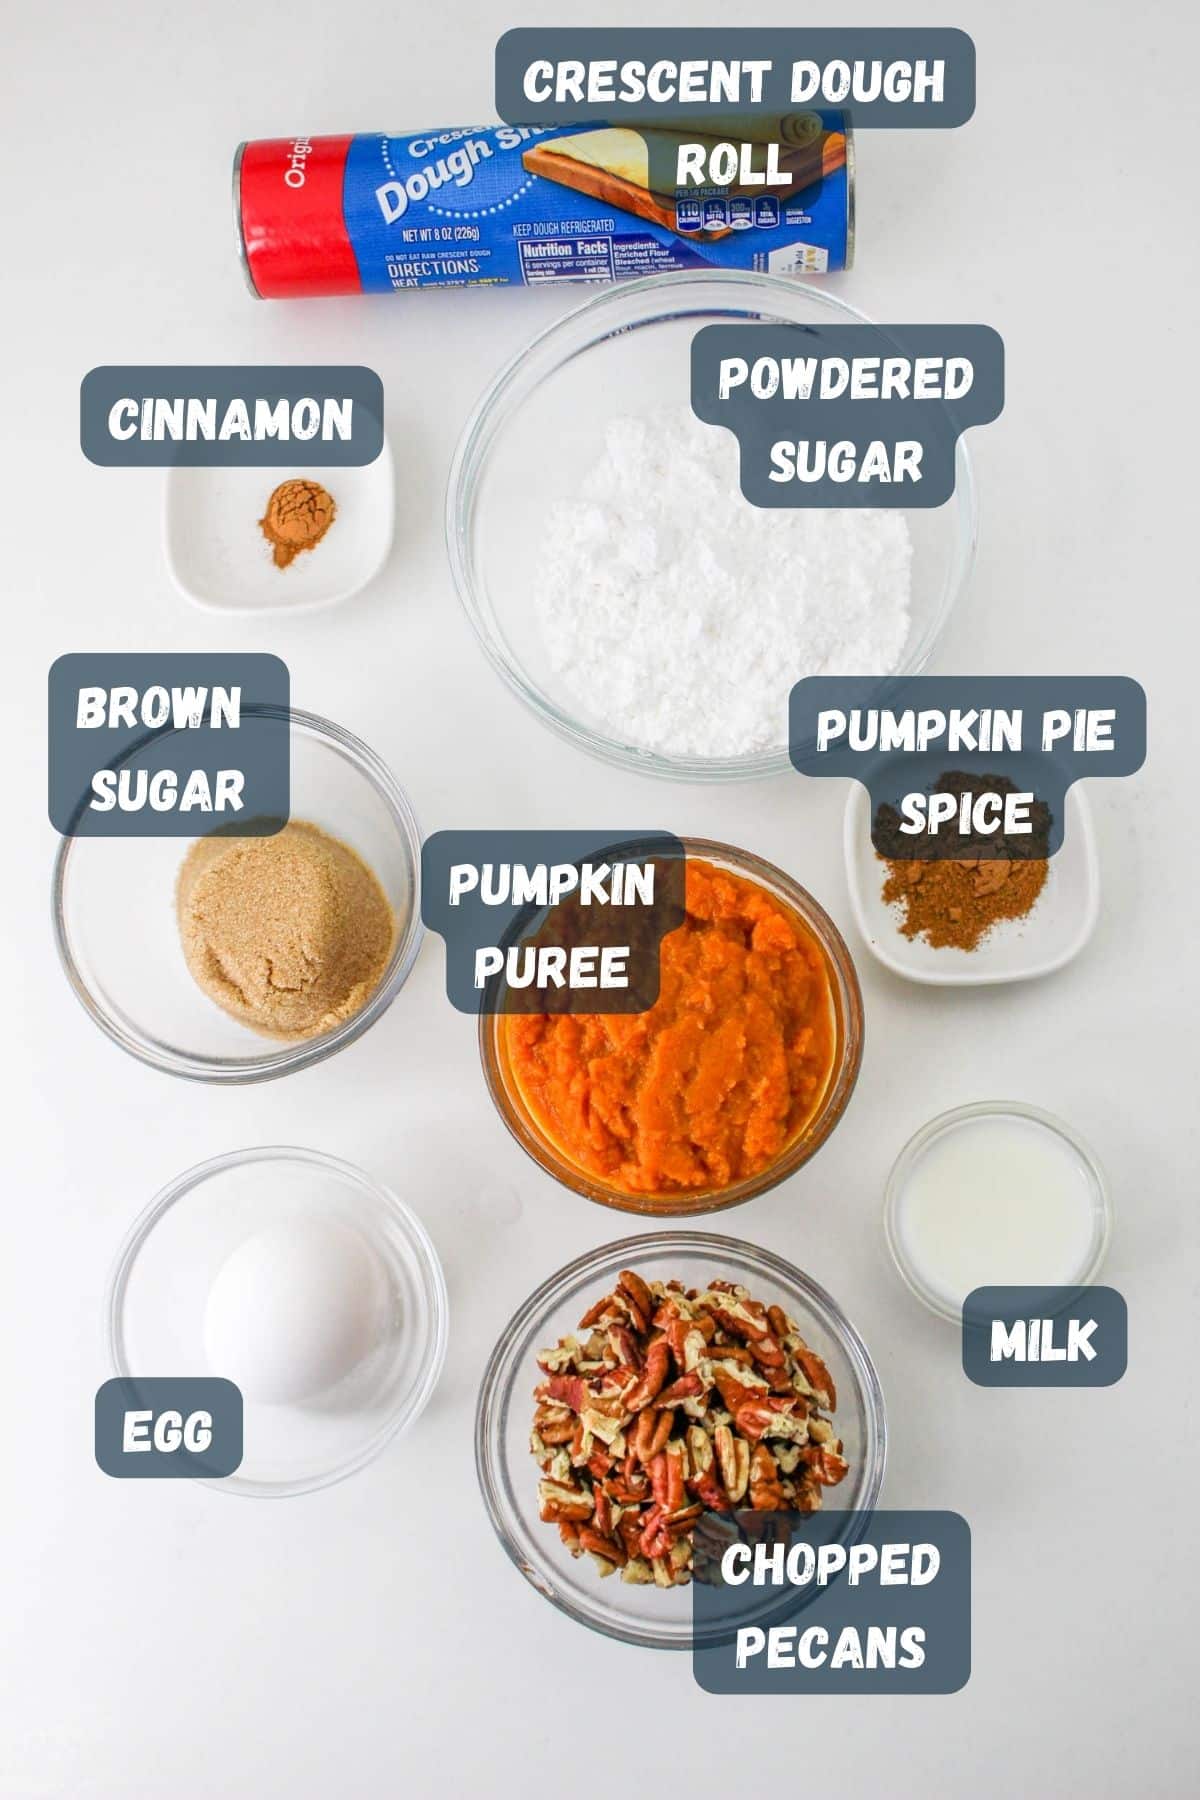 Ingredients shown to make a pumpkin pastry braid. 